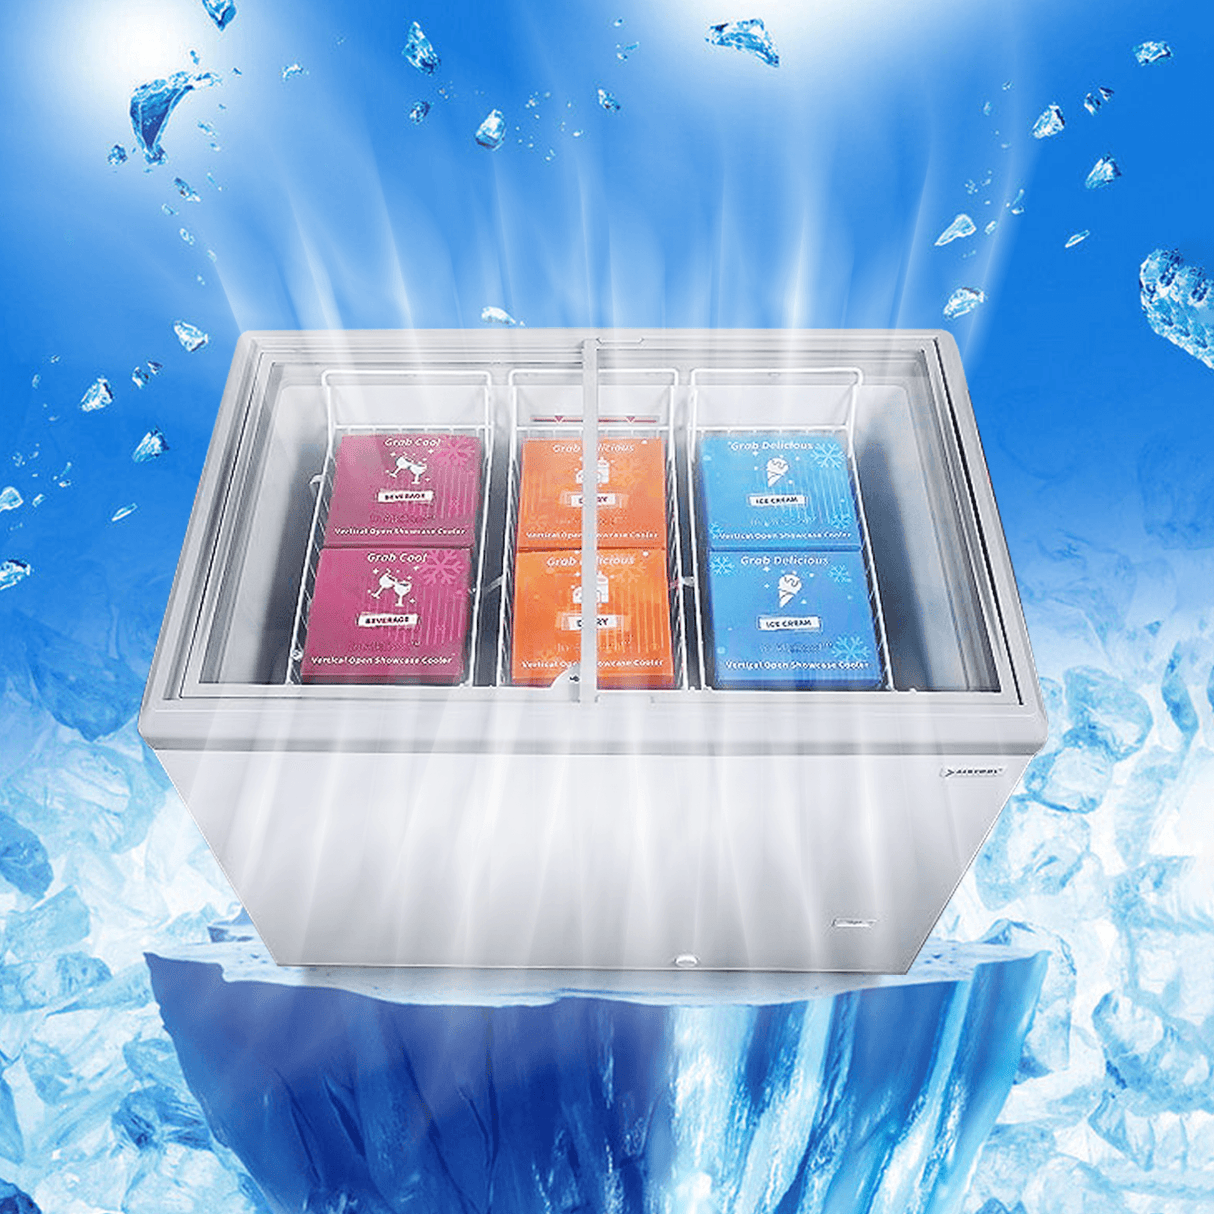 FDF12.4CF Horizontal Freezer - NAFCOOL Commercial Refrigerator - NAFCOOL